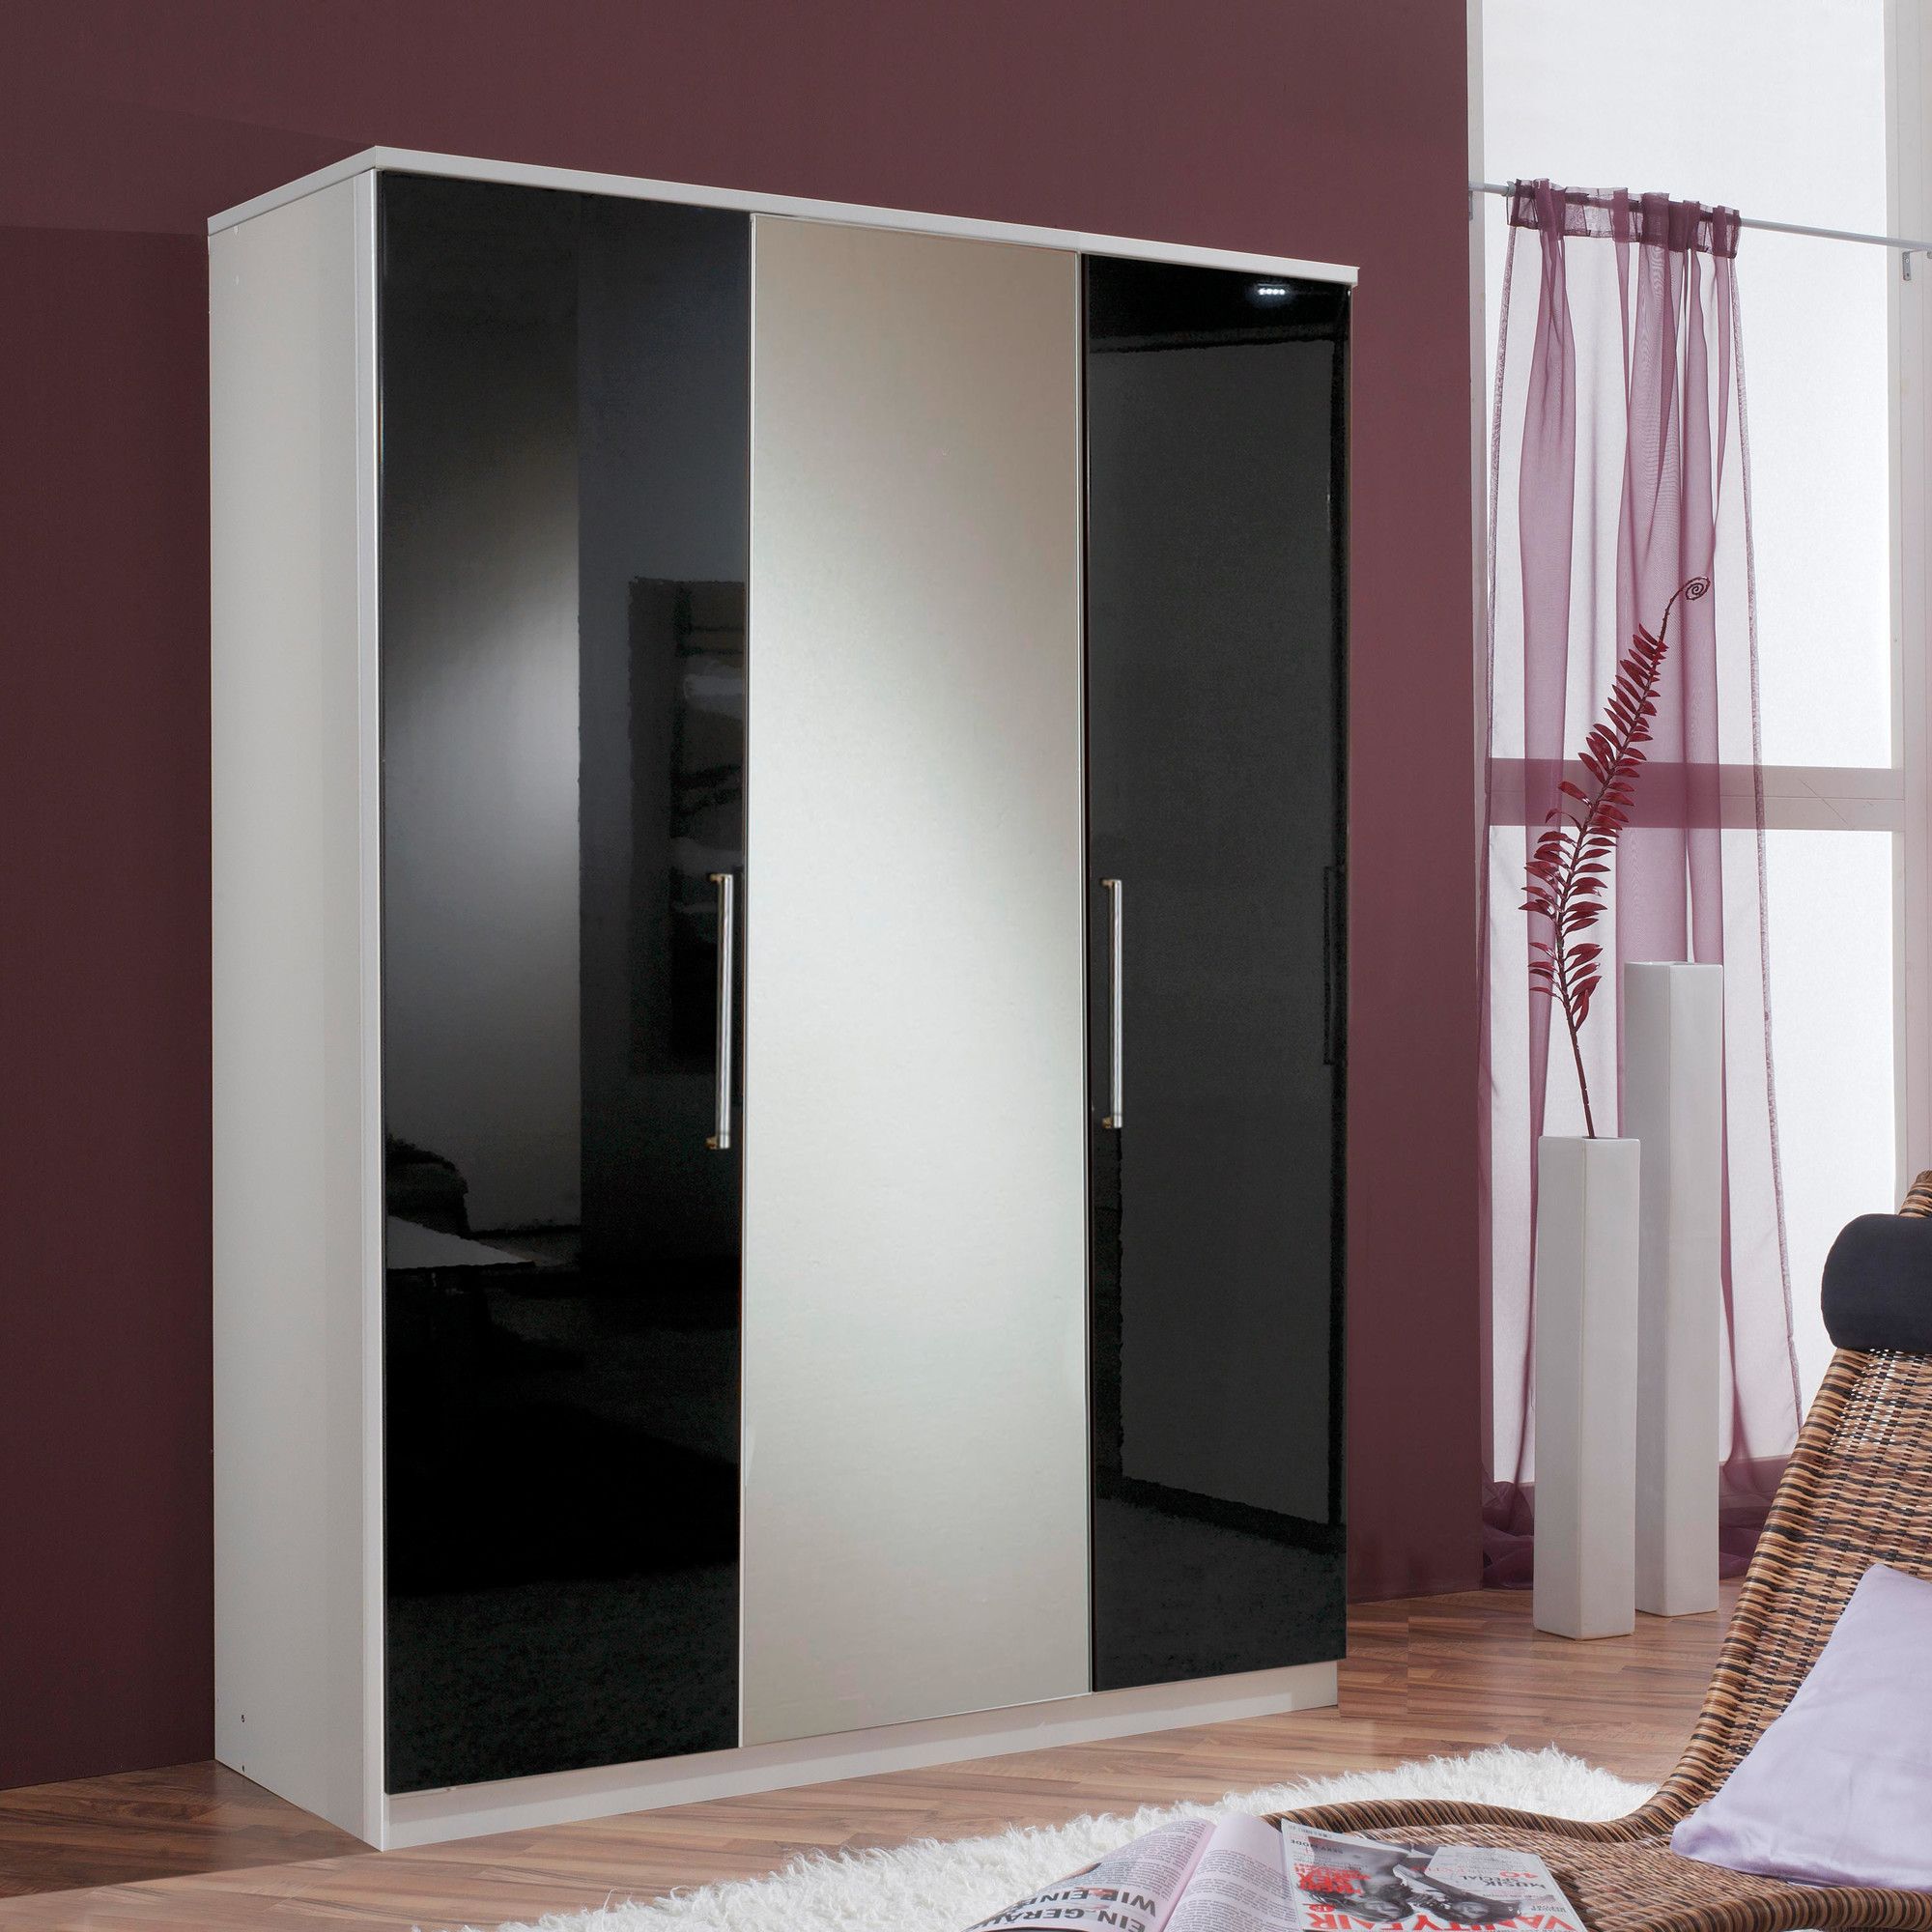 Amos Mann furniture Milano 3 Door Wardrobe - Black and White at Tesco Direct